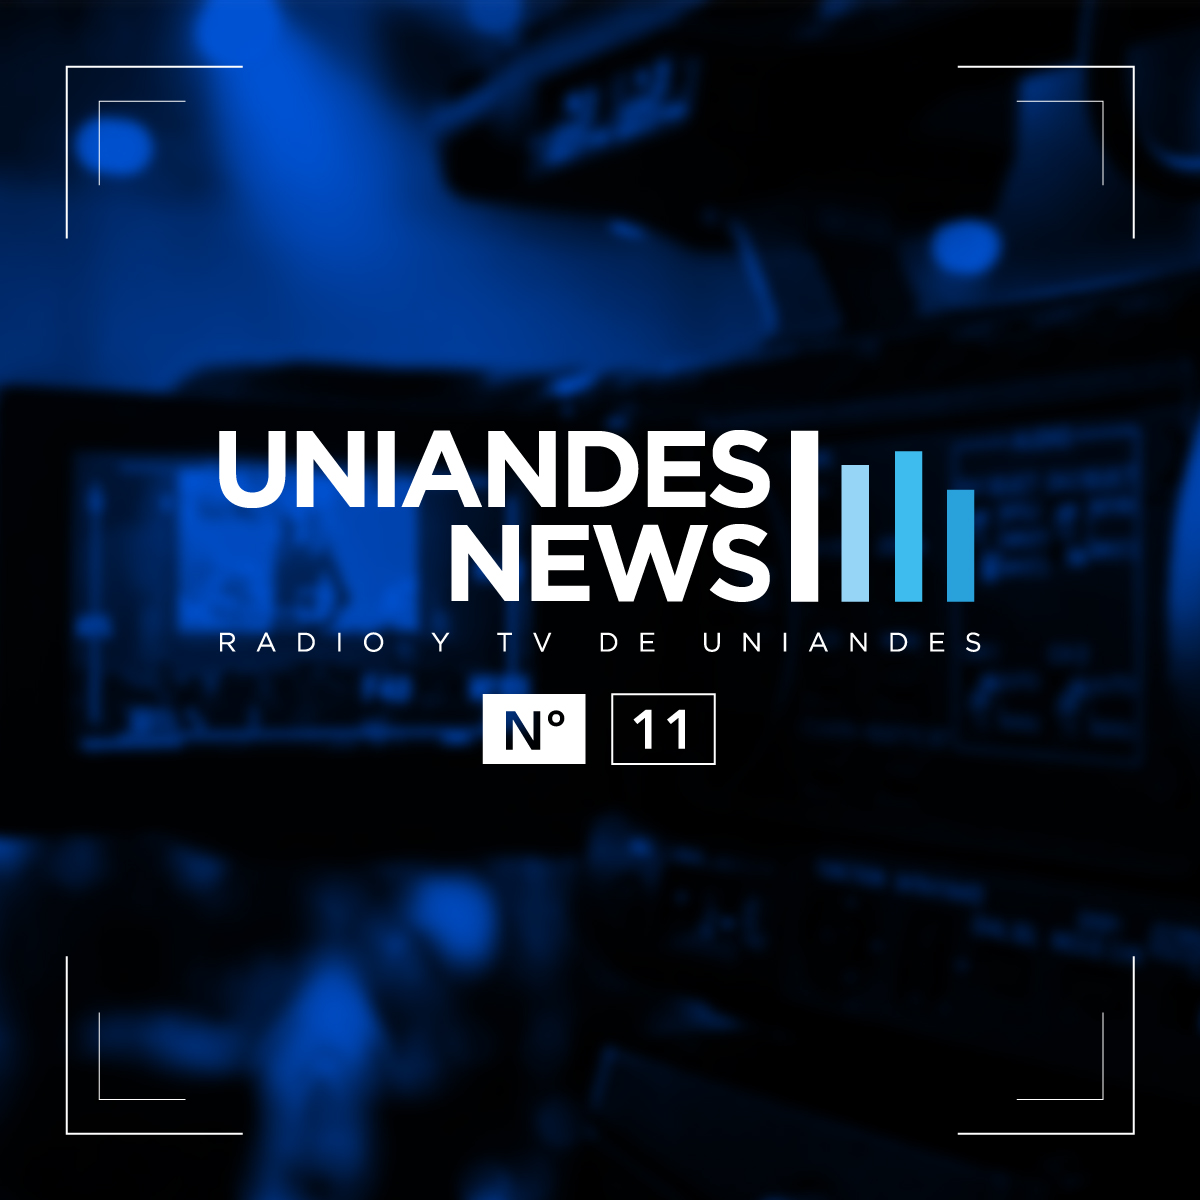 Uniandes News 11